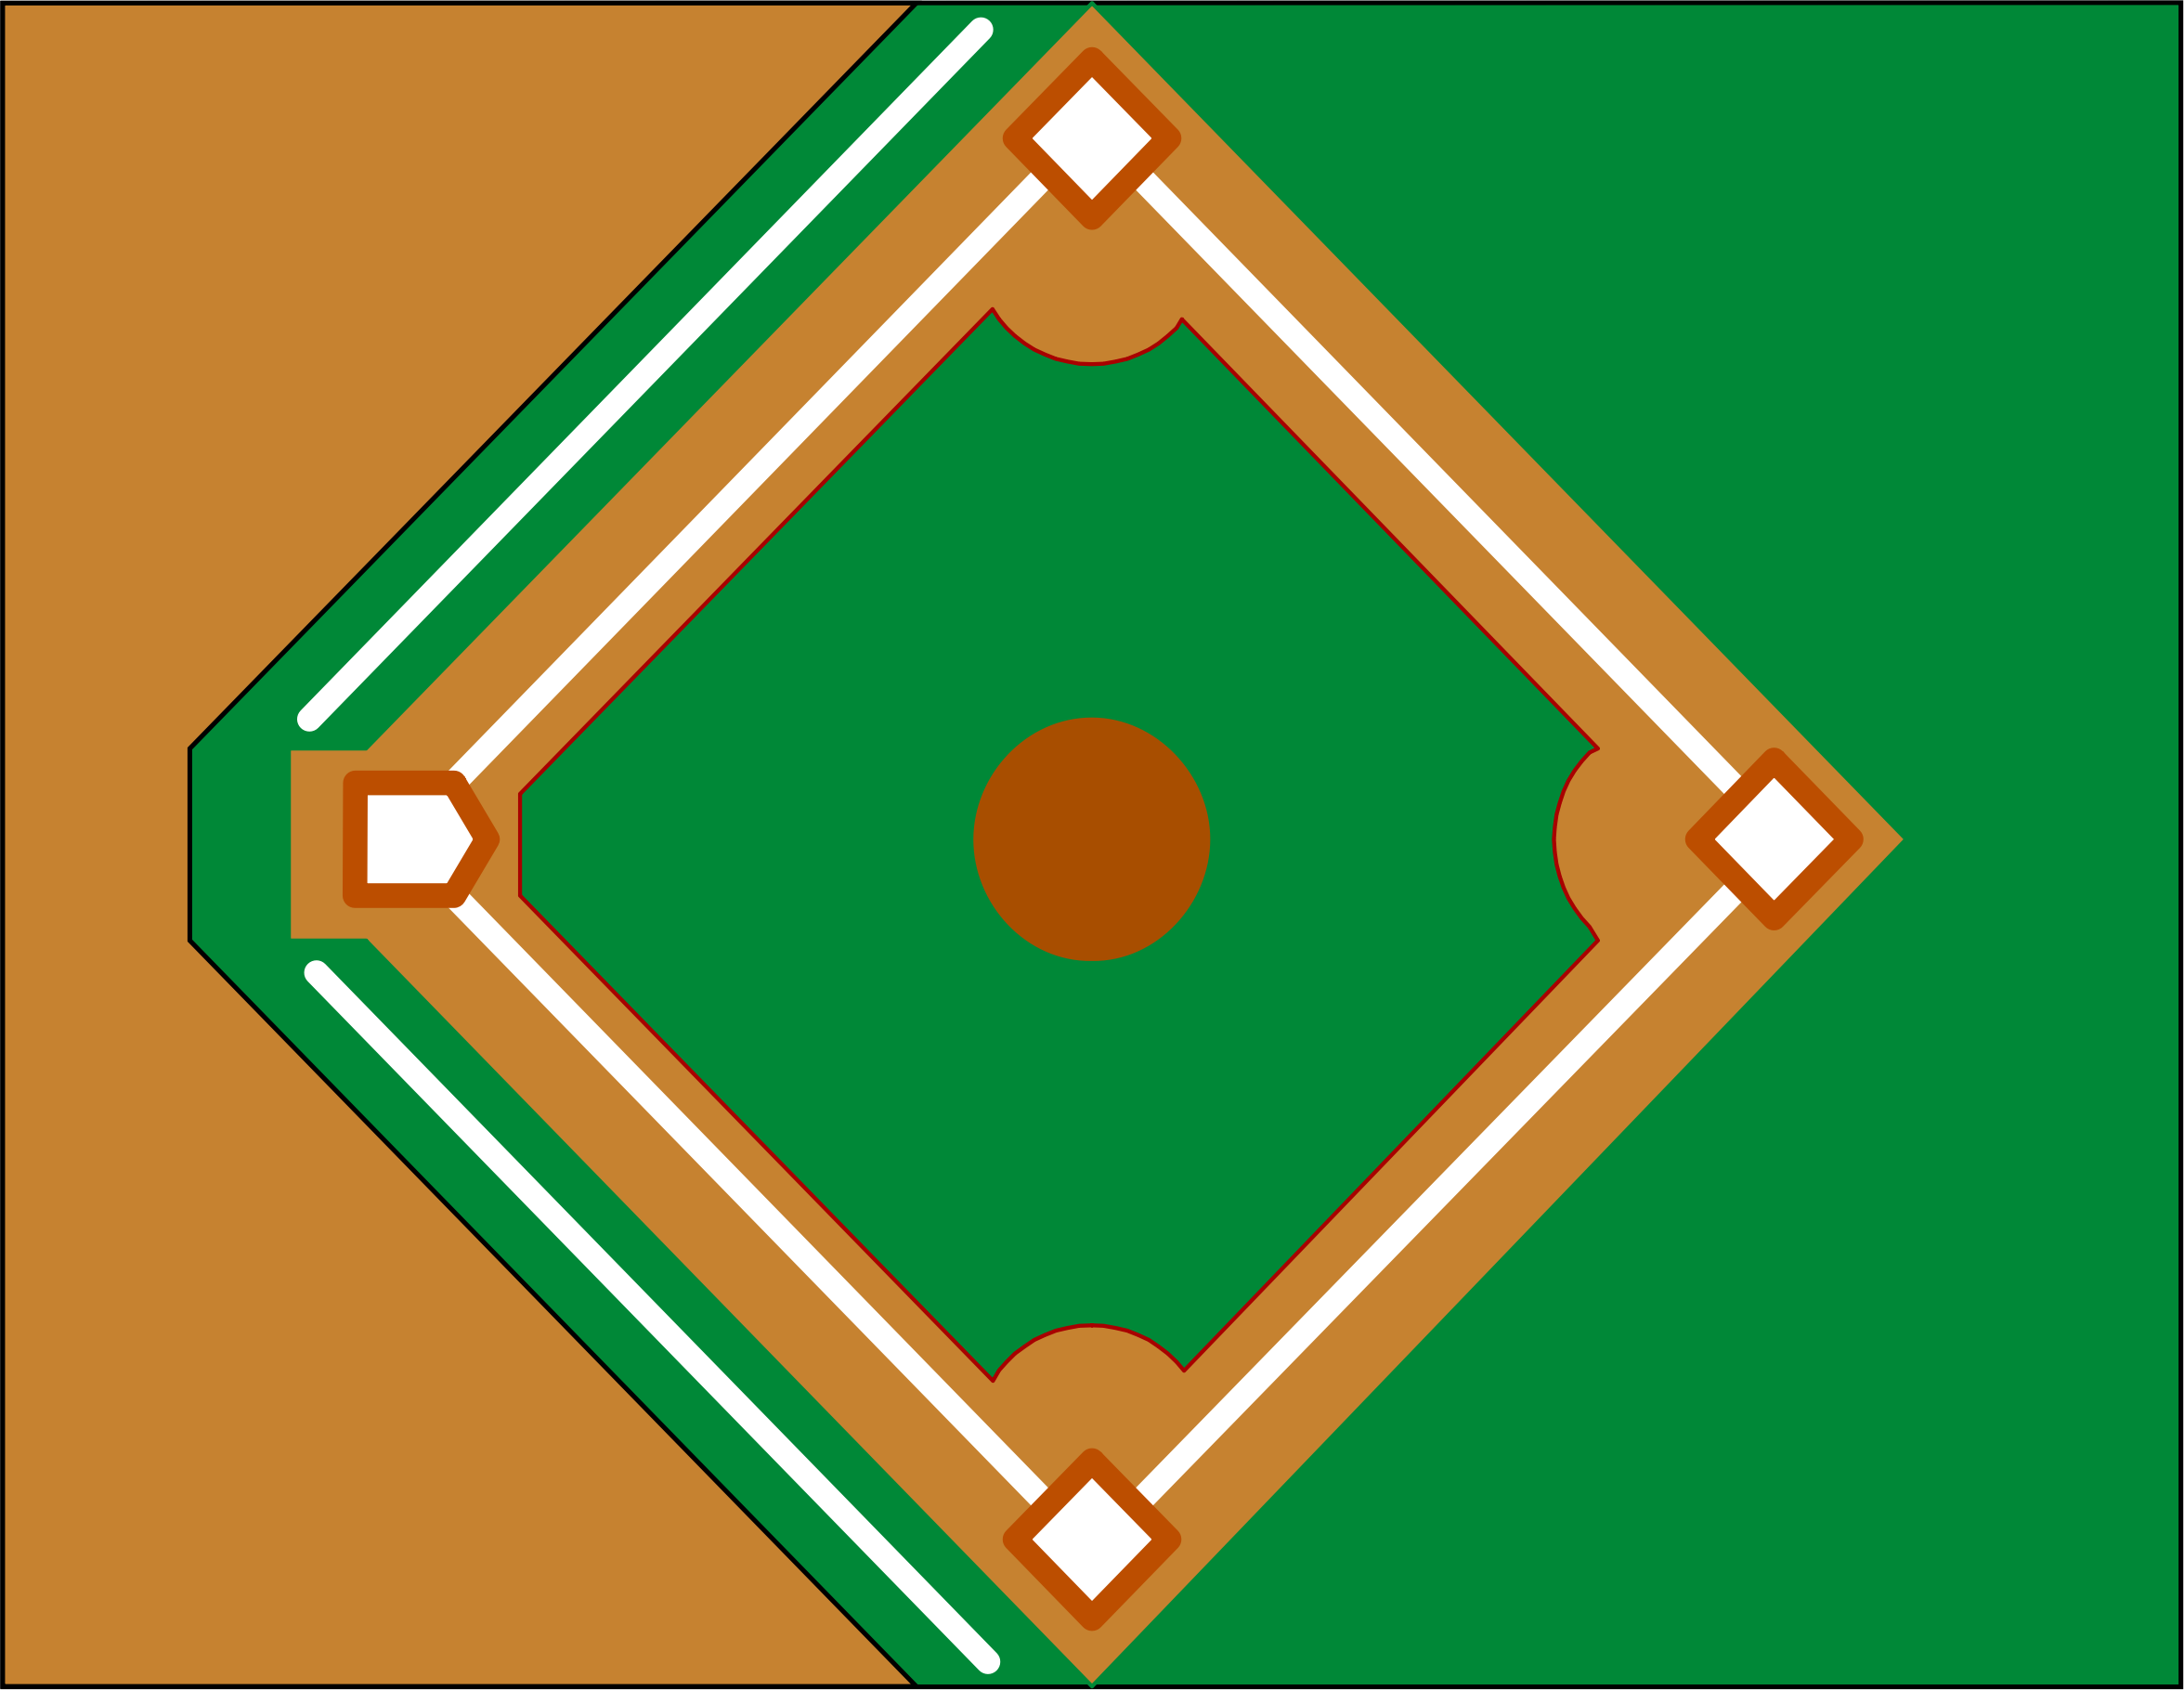 Baseball diamond image.